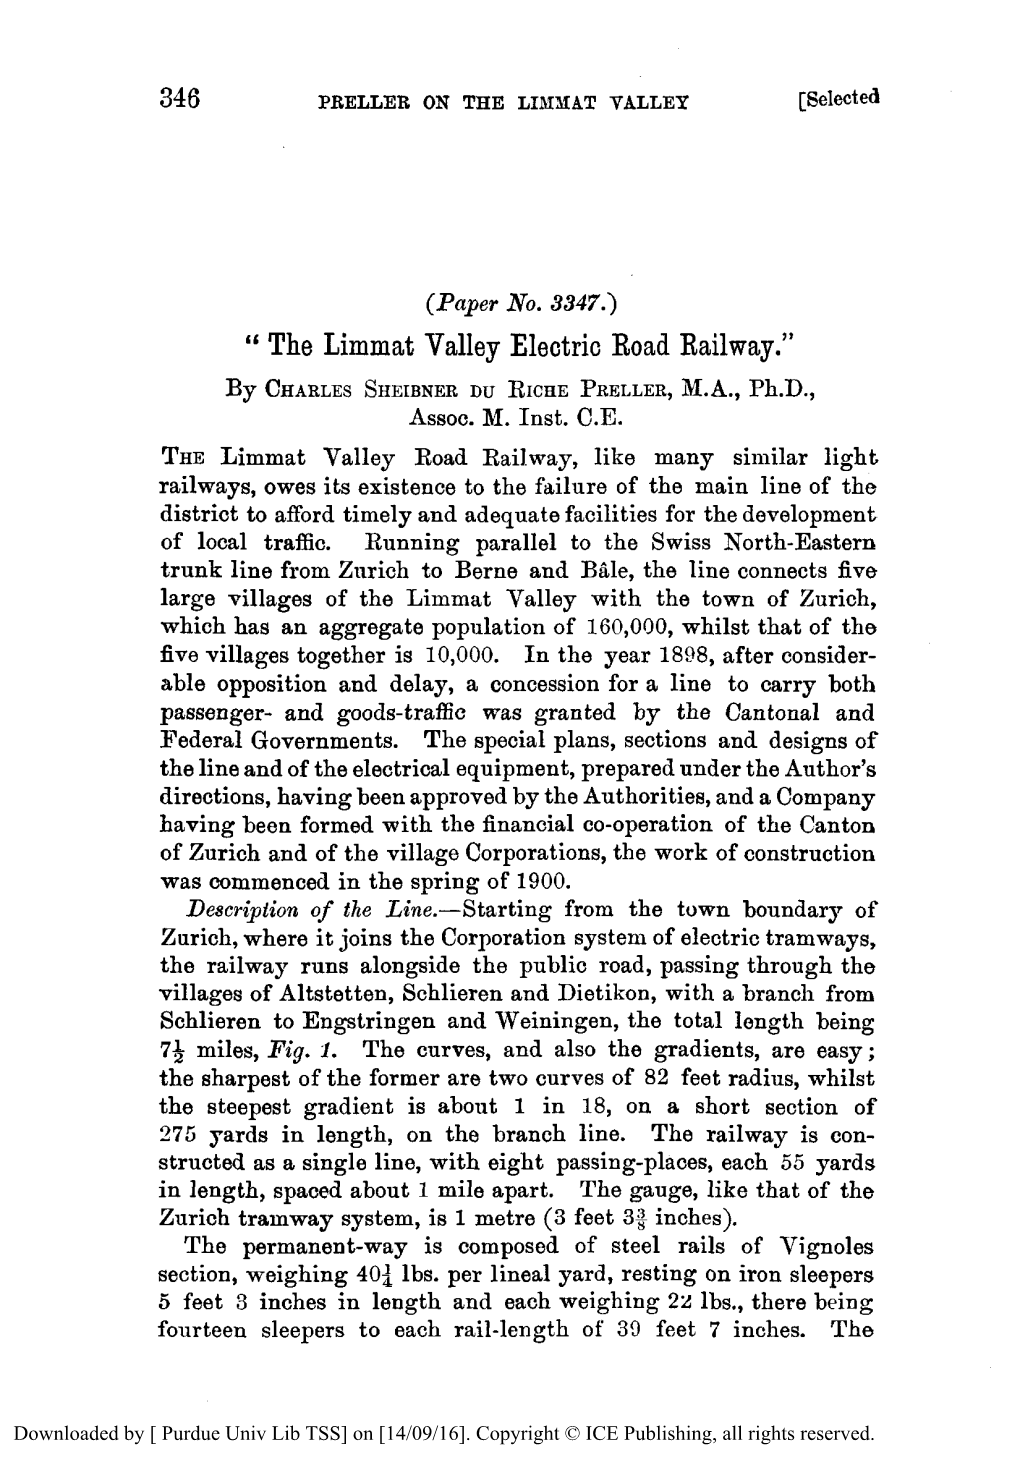 The Limmat Valley Electric Road Railway.” by CHARLESSHEIBNER DU RICEEPRELLER, M.A., Ph.D., Assoc